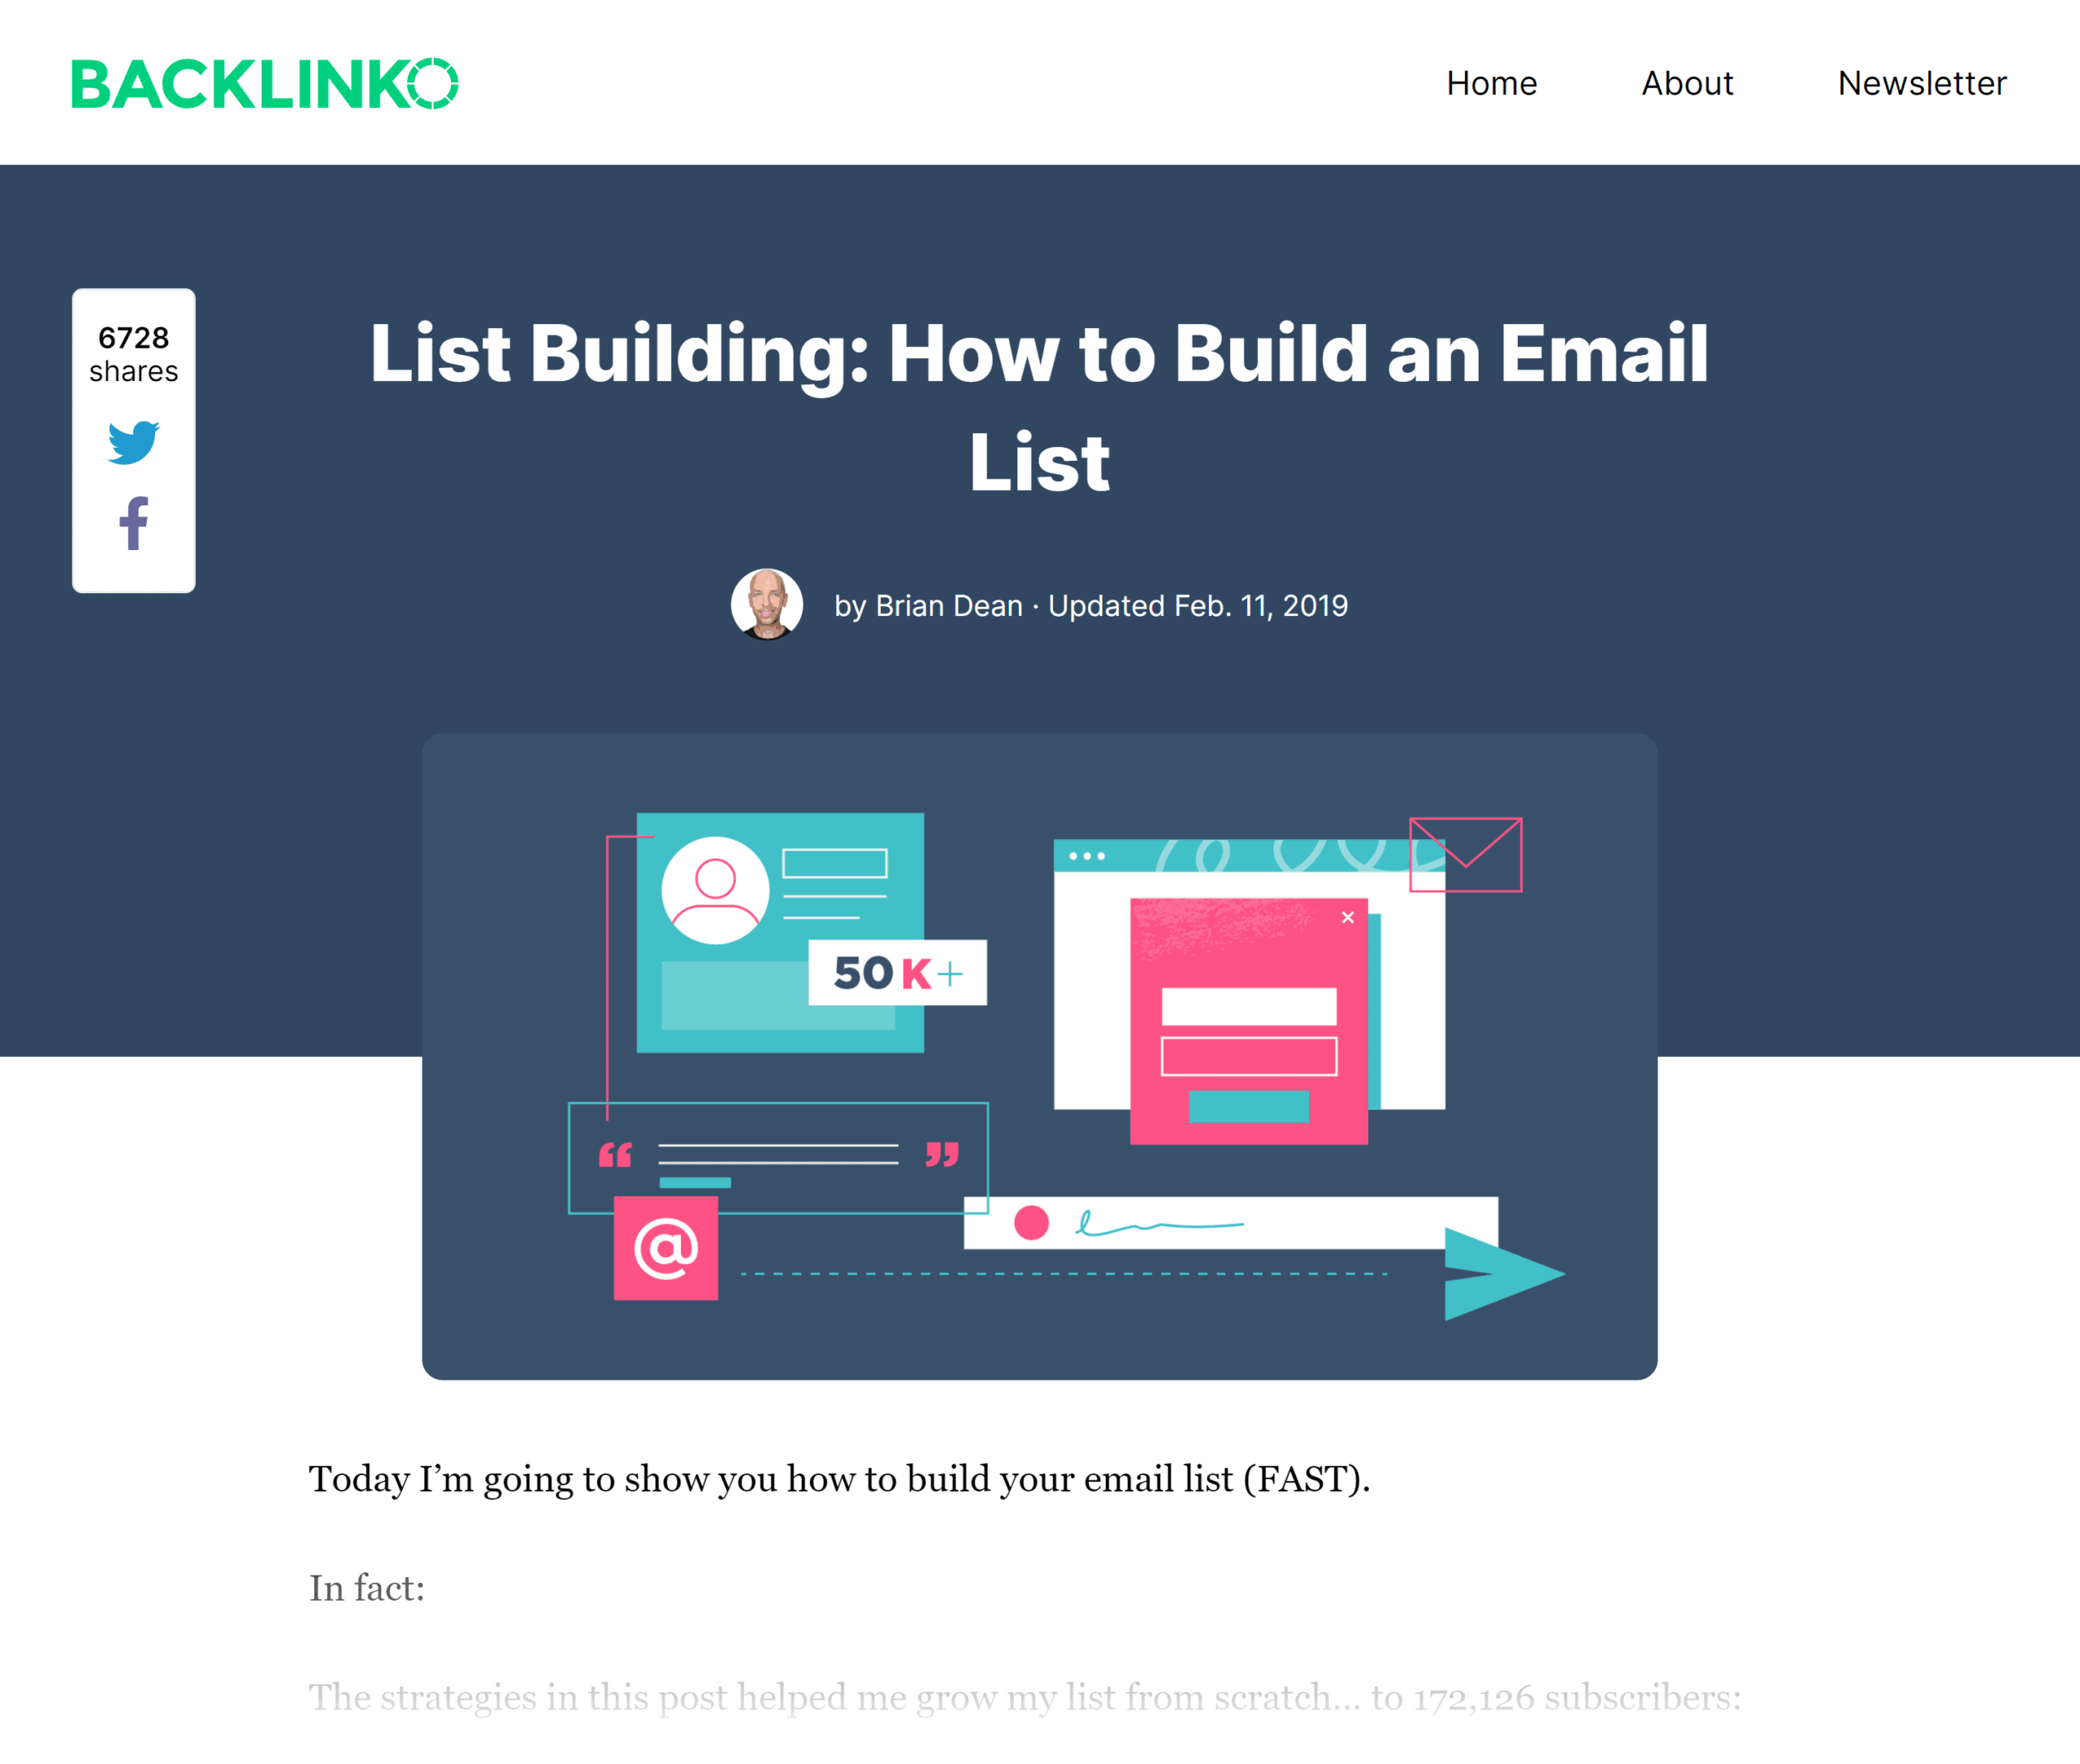 Backlinko – List building post